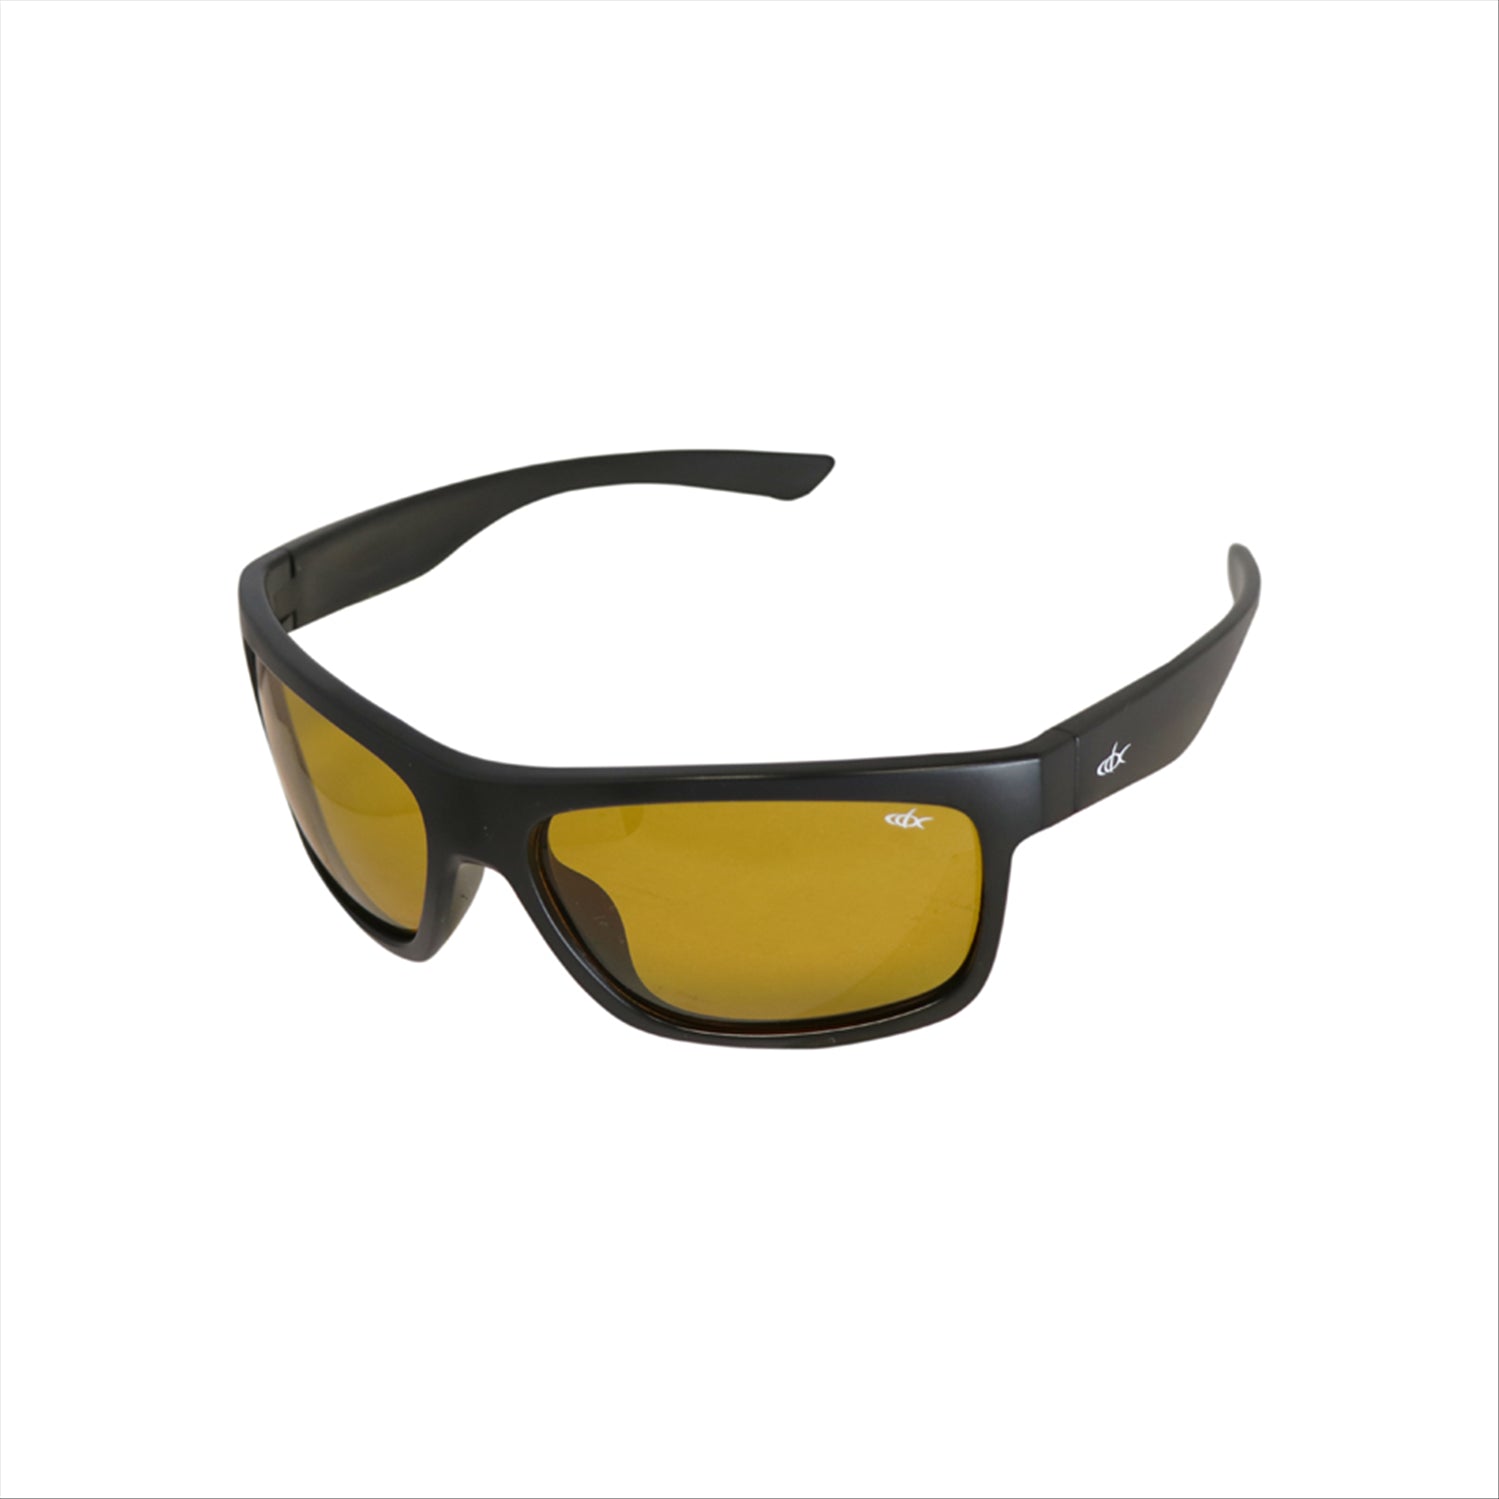 CDX Cdx Slick Fish Polarized Scratch Resistant Sunglasses